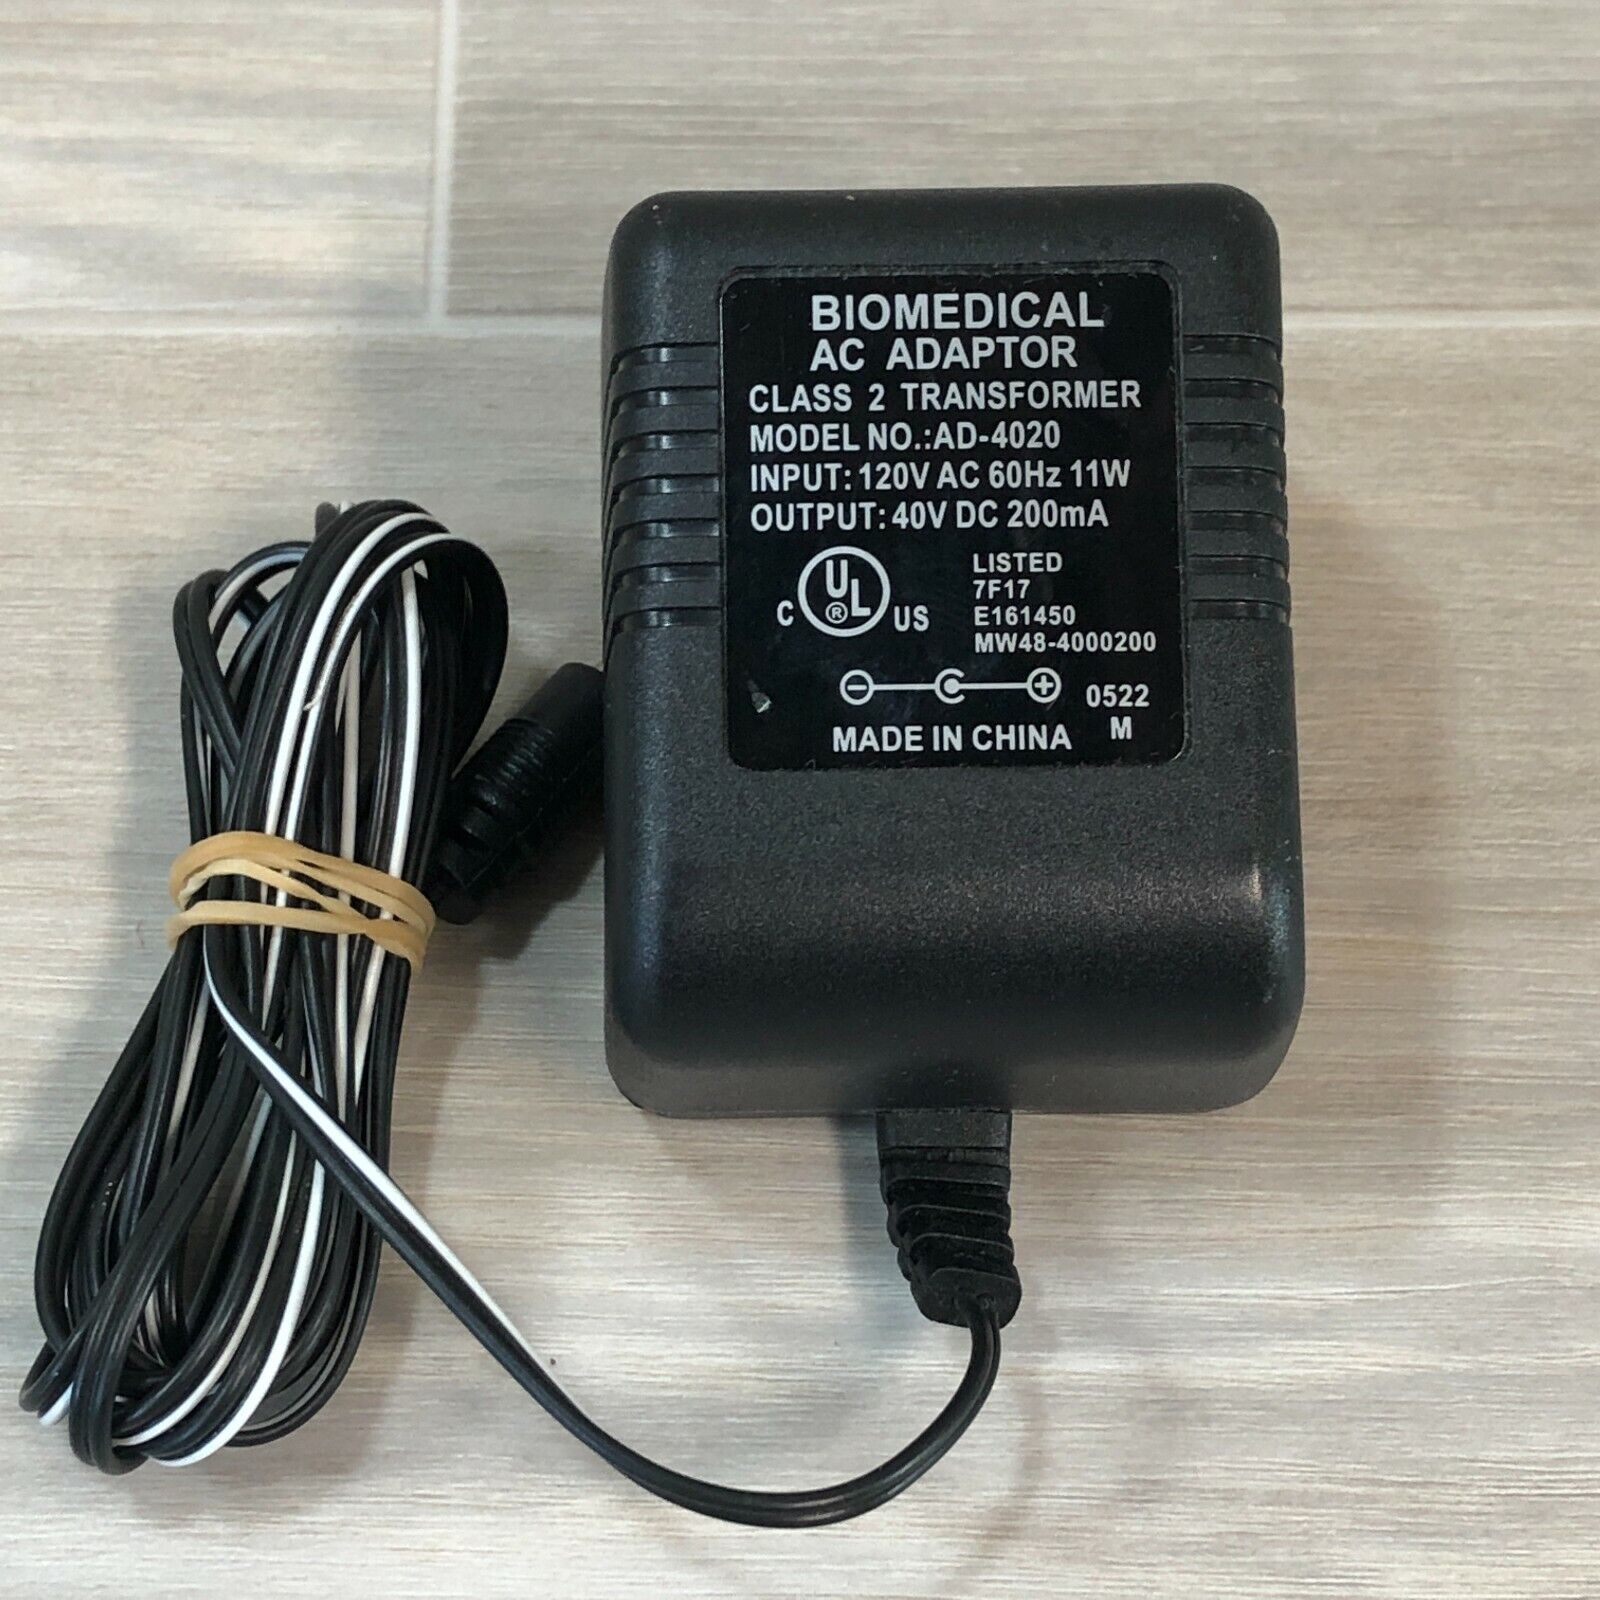 *Brand NEW*200mA 40VDC Biomedical AC Adaptor AD-4020 AC DC ADAPTER POWER SUPPLY